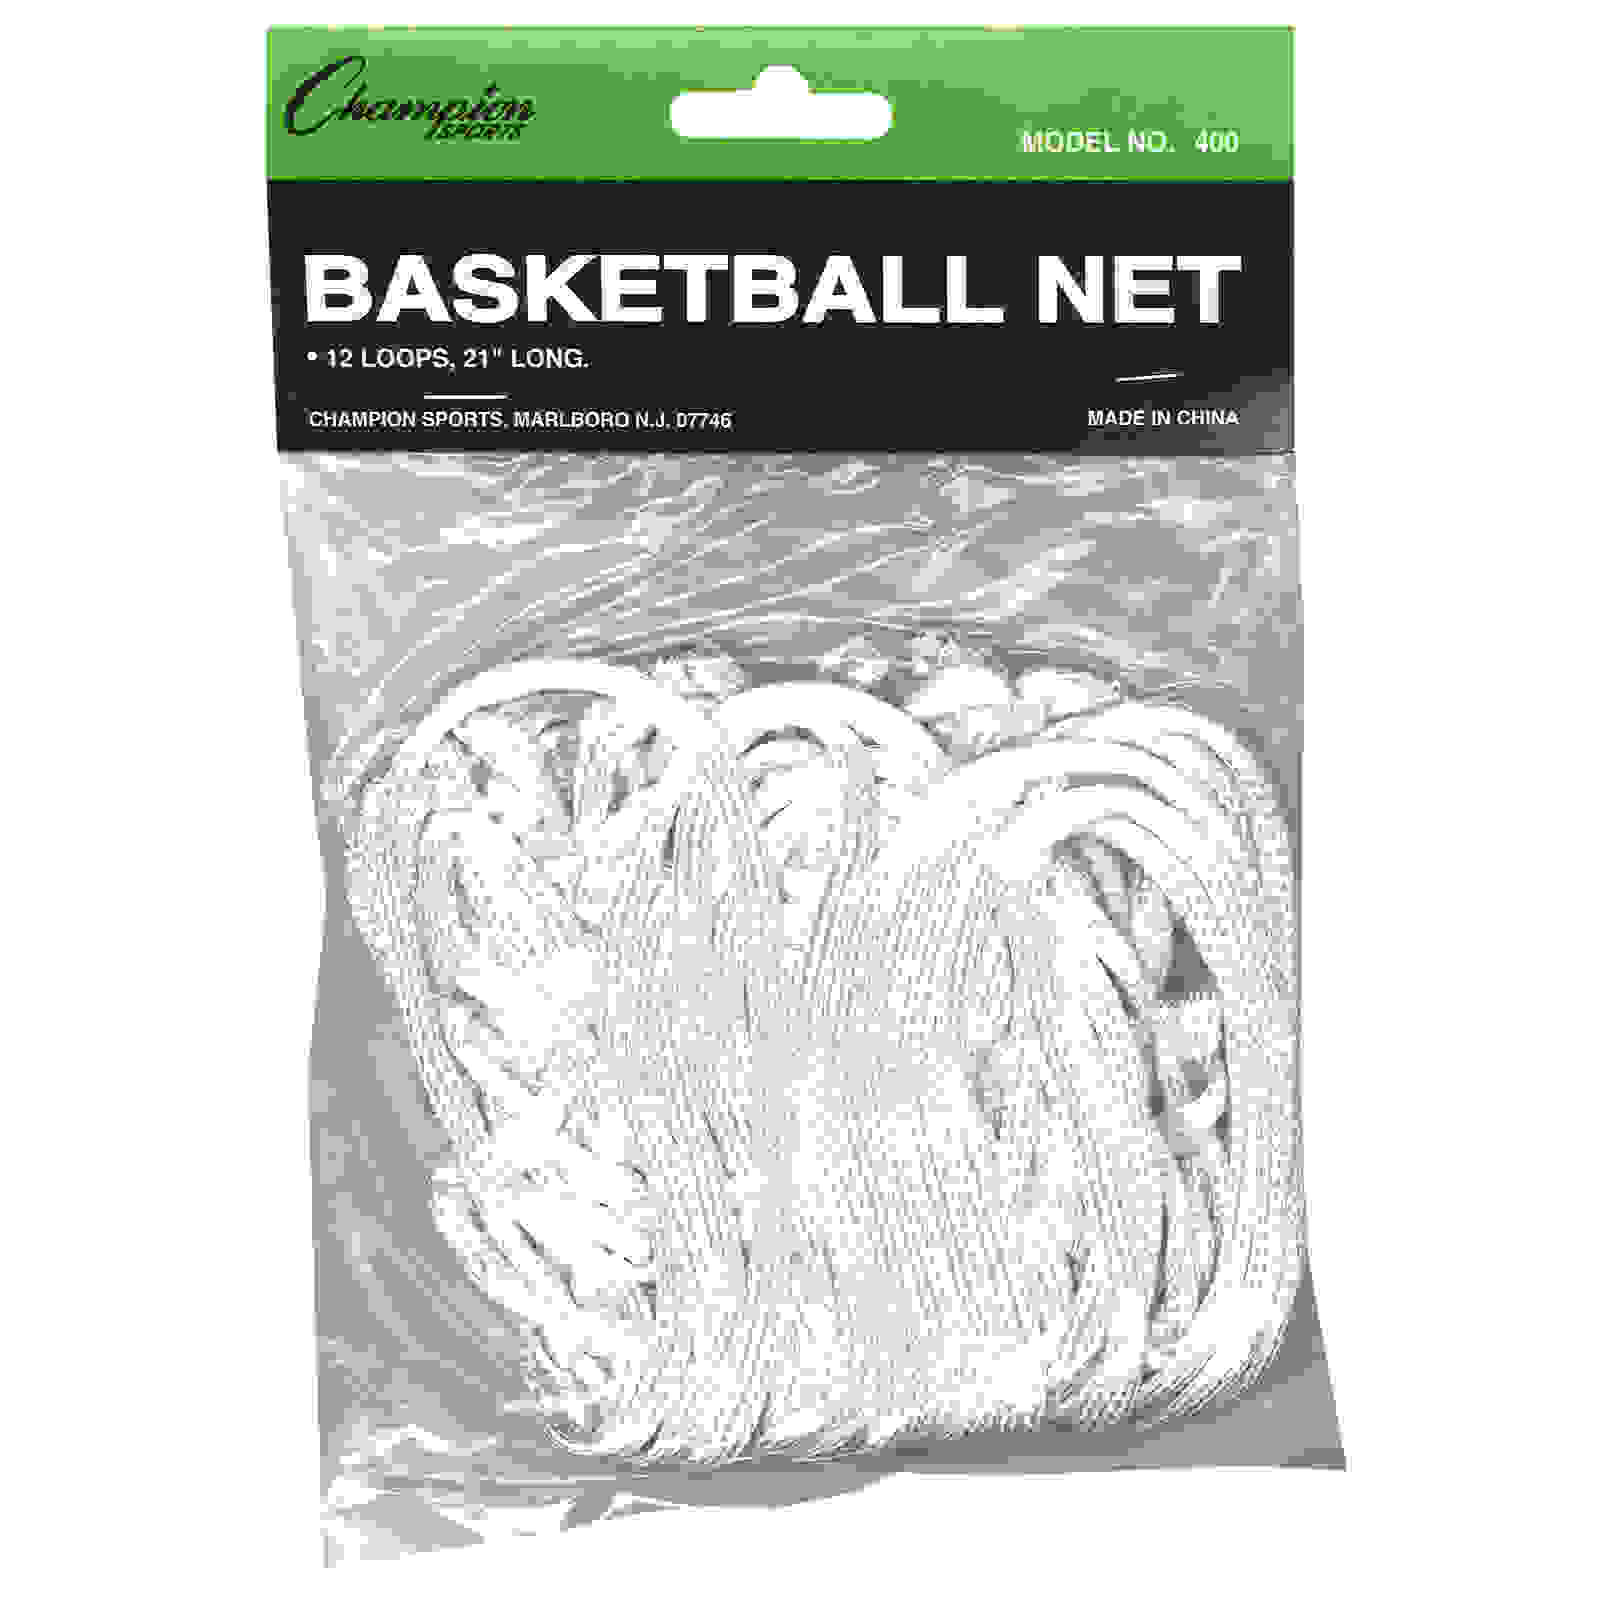 Basketball Net, Standard Size, 4mm Braided Nylon